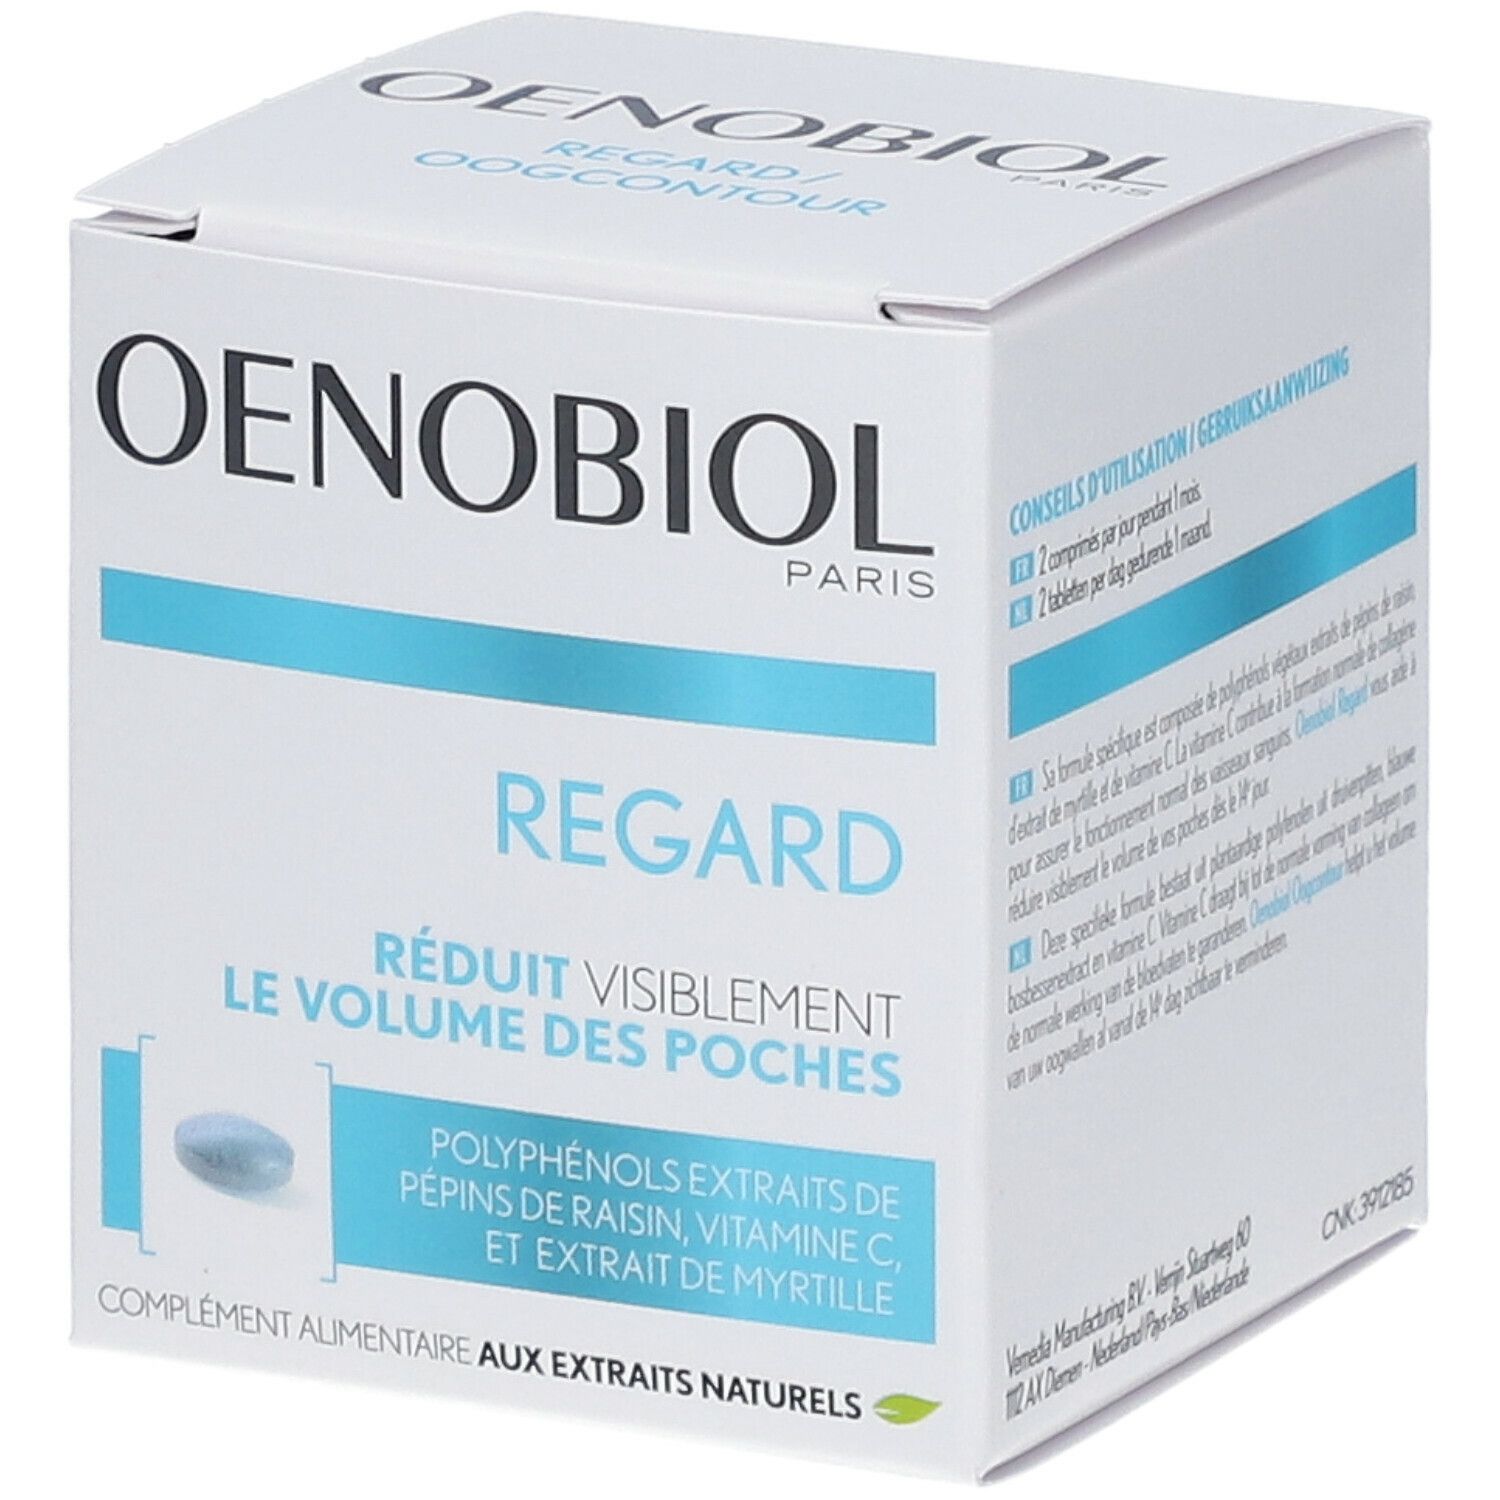 Oenobiol Regard